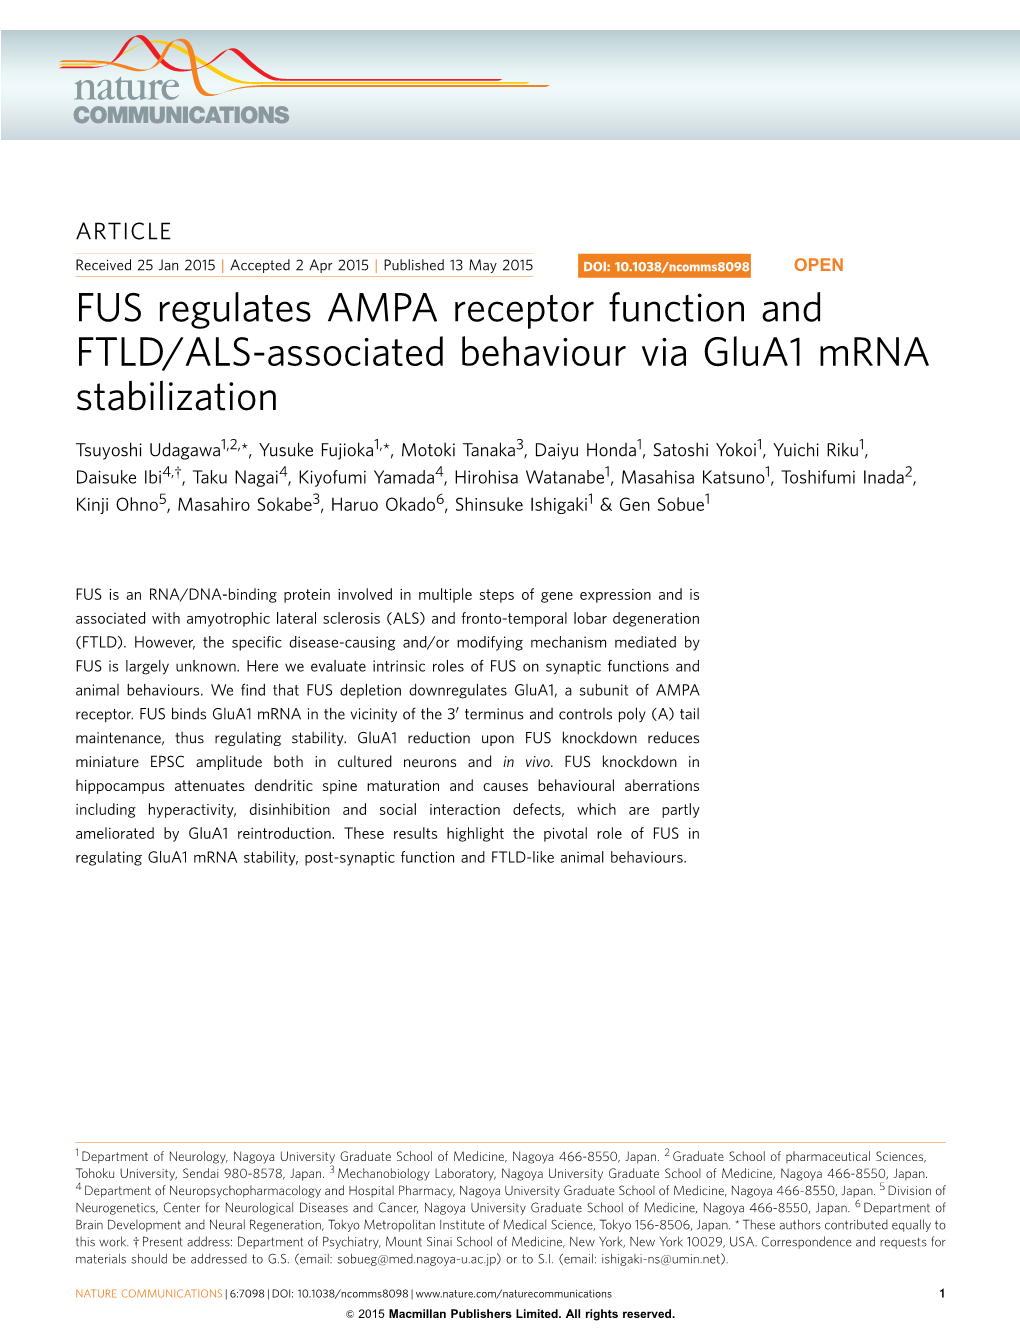 FUS Regulates AMPA Receptor Function and FTLD/ALS-Associated Behaviour Via Glua1 Mrna Stabilization